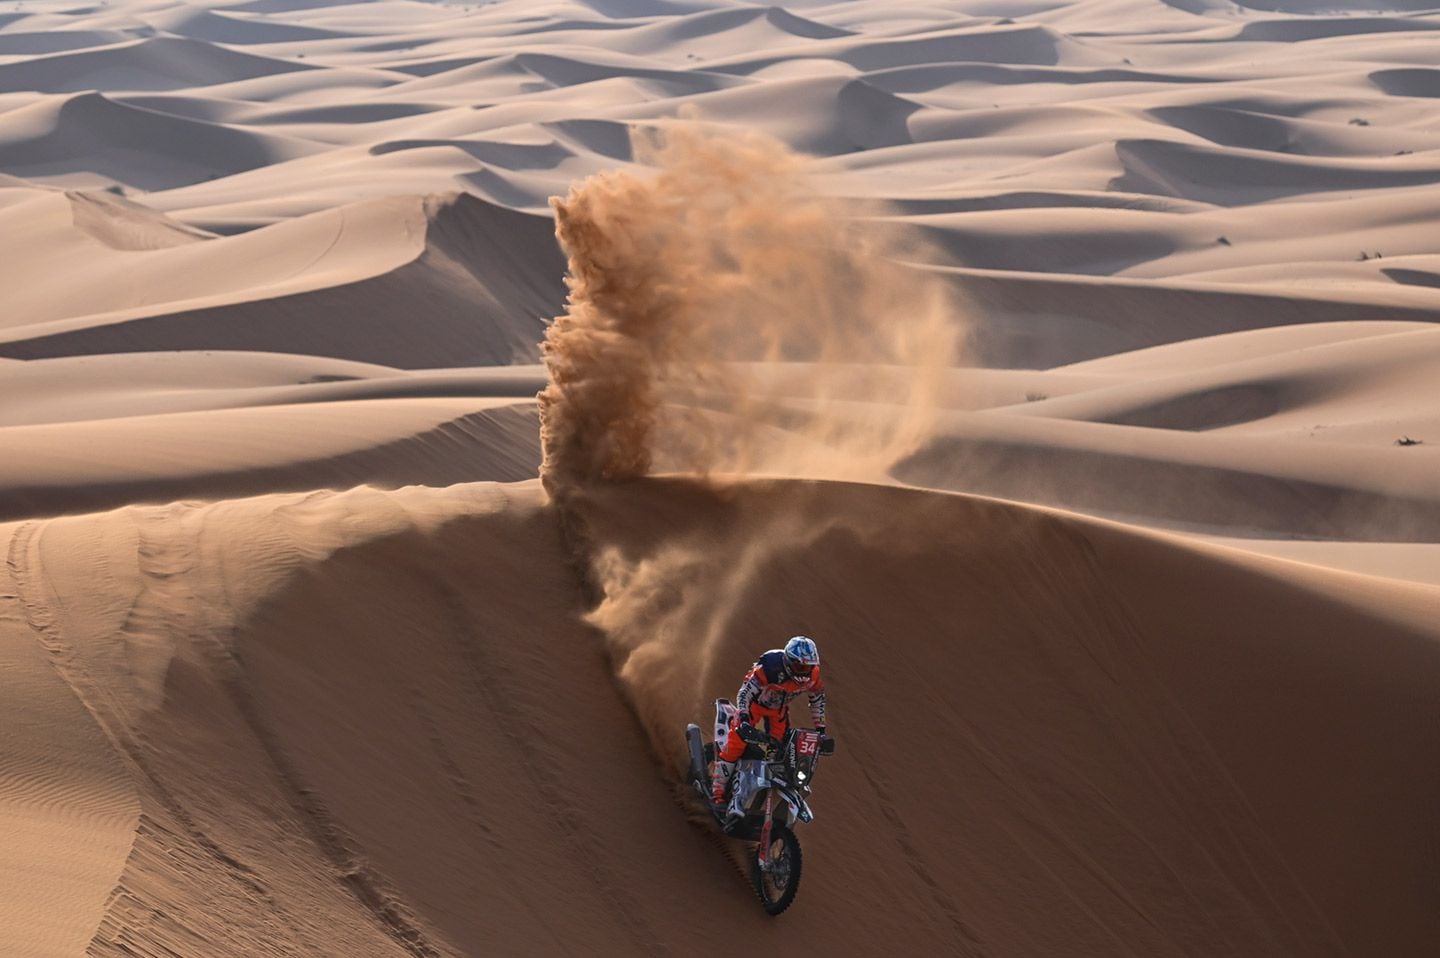 Rule 1: Do not jump the dunes. Emanuel Gyenes of the Autonet Motorcycle Team KTM.